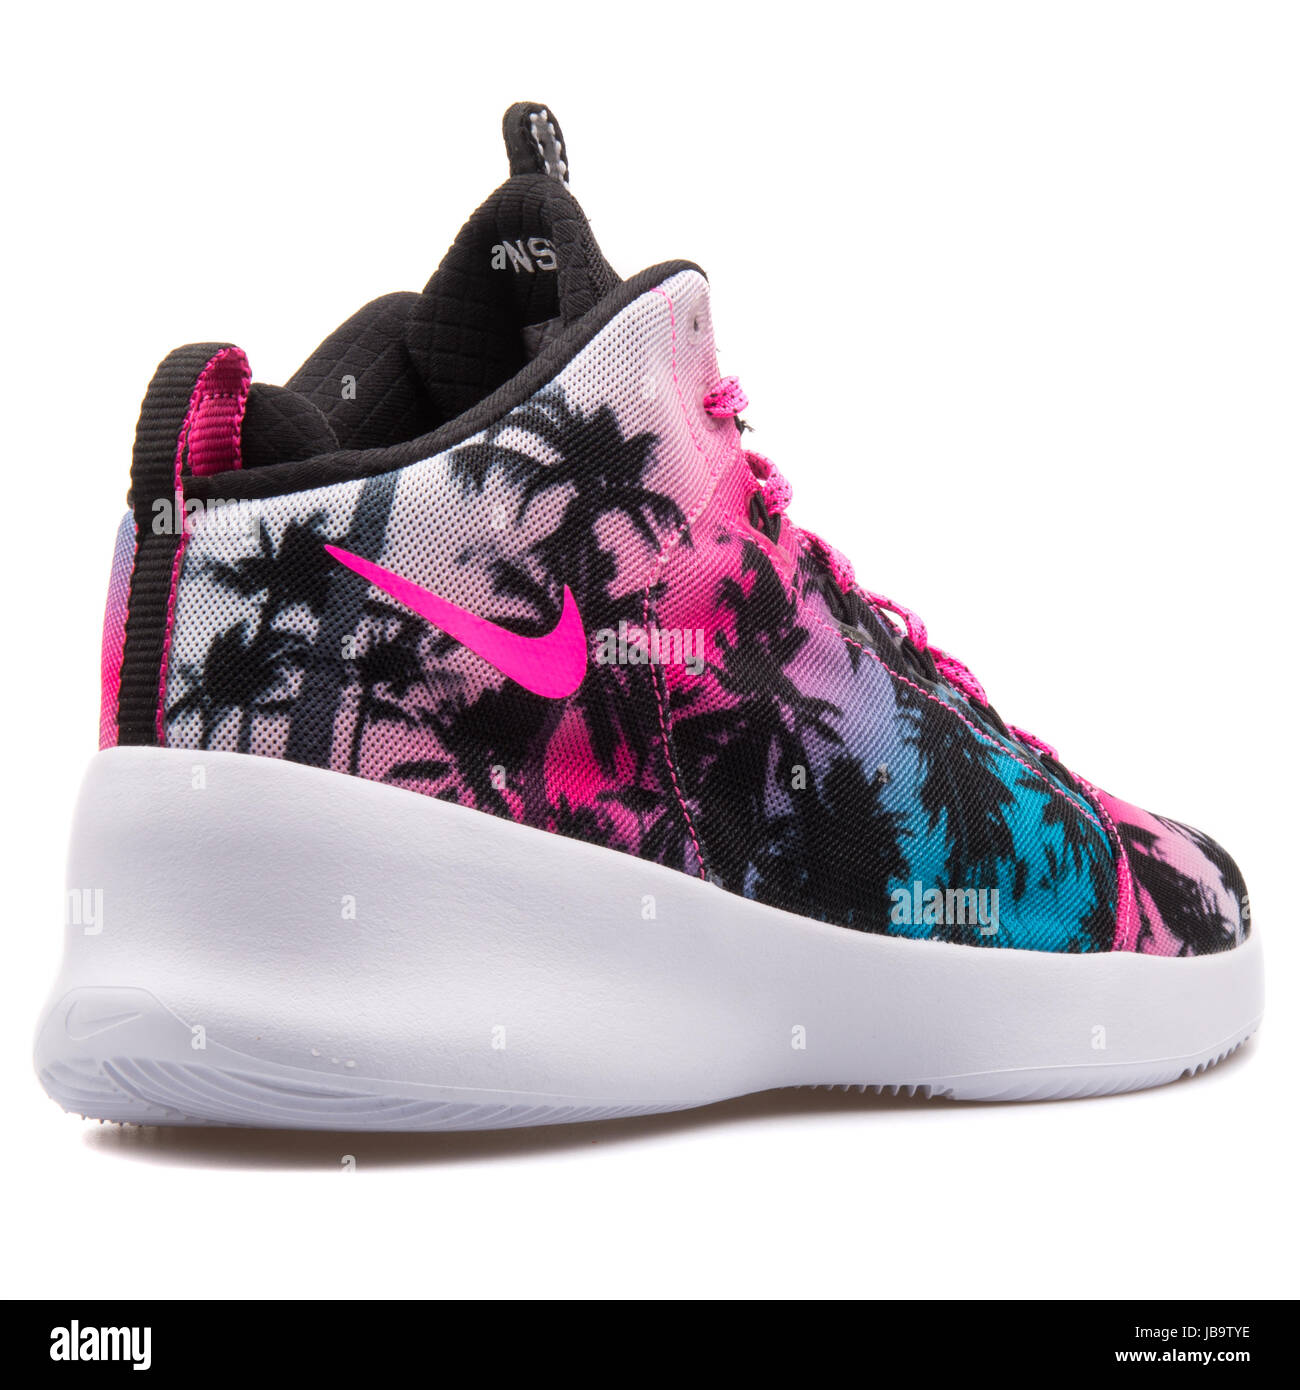 Nike Hyperfr3sh QS Blue Lagoon, Pink Blast Men's Basketball Shoes -  808781-400 Stock Photo - Alamy